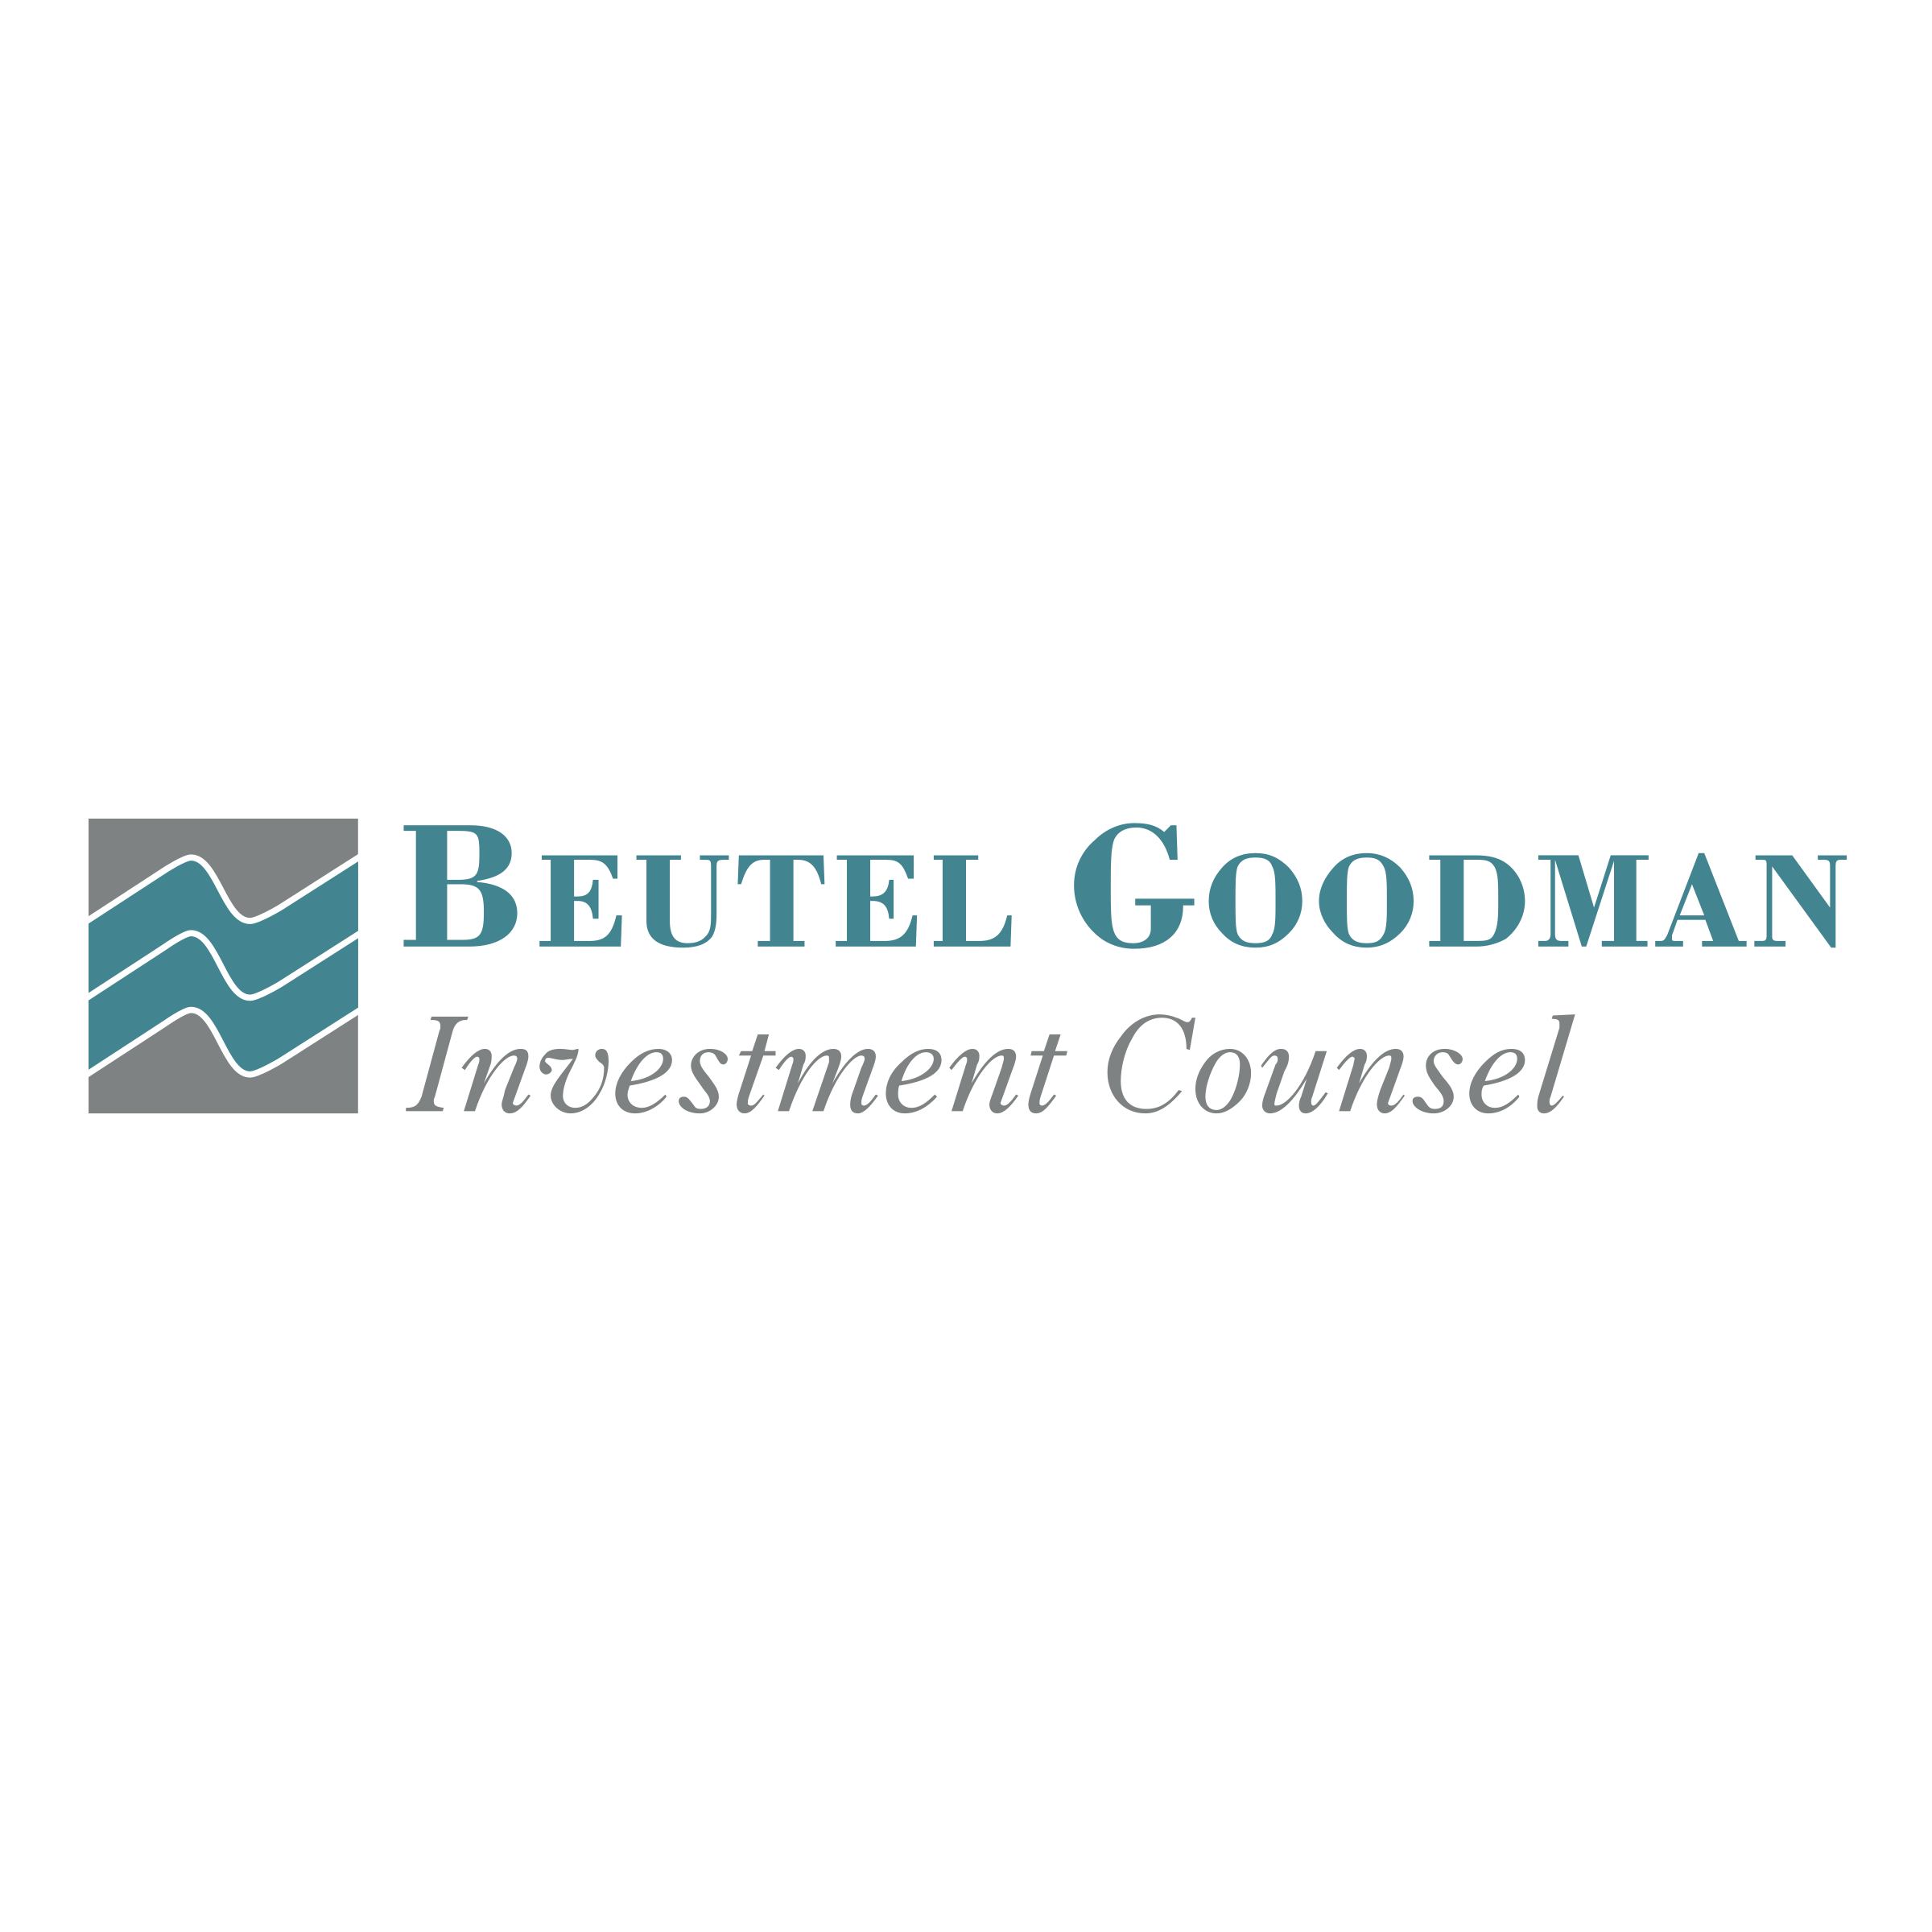 Goodman Logo - Beutel Goodman Logo PNG Transparent & SVG Vector - Freebie Supply